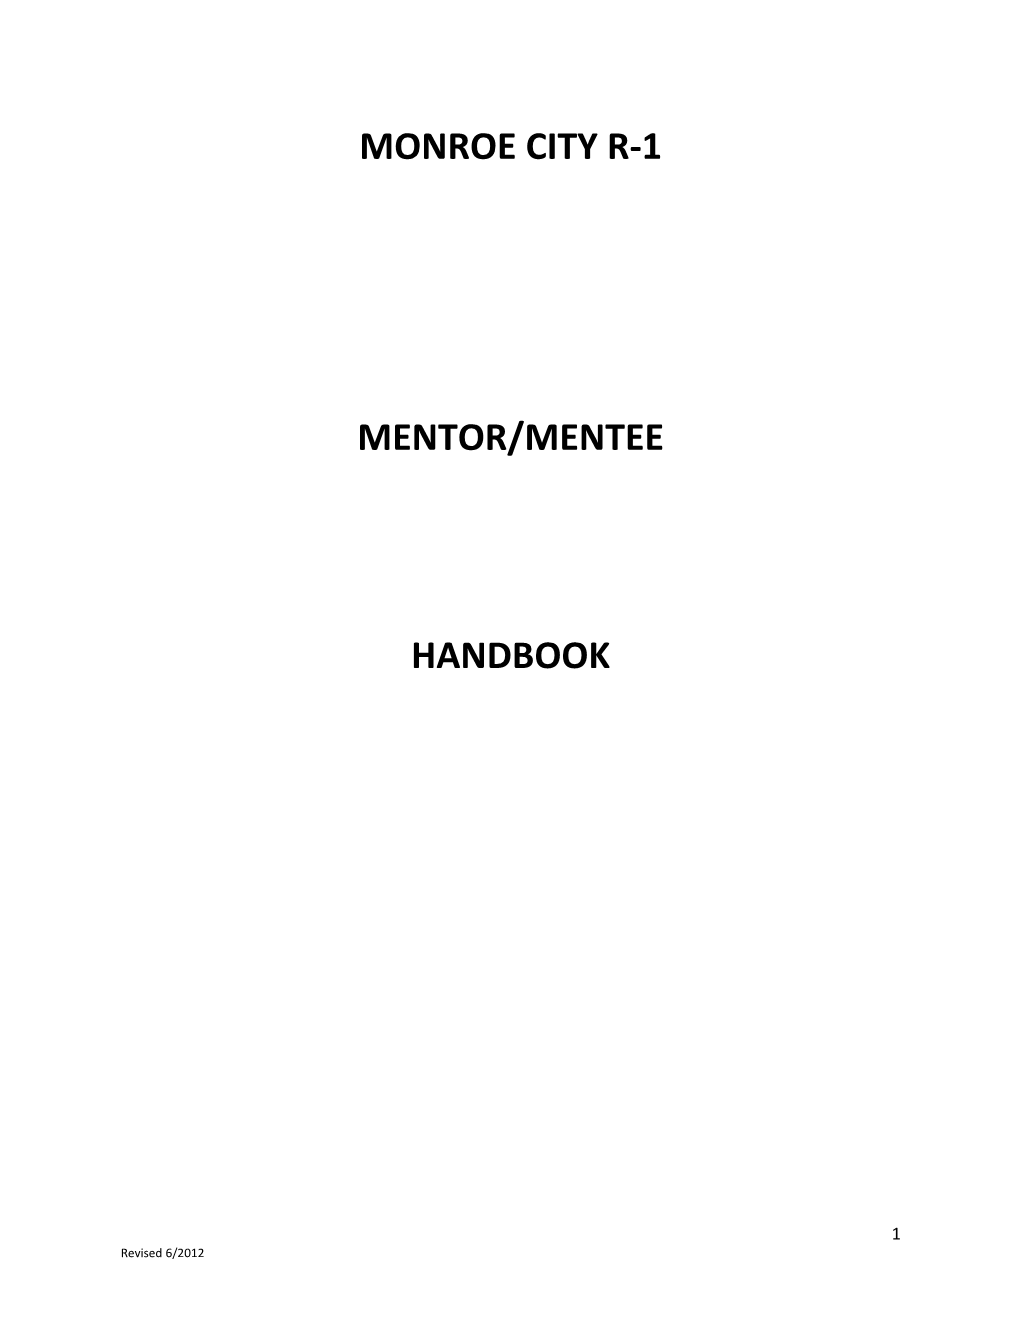 Mentor/Mentee Handbook